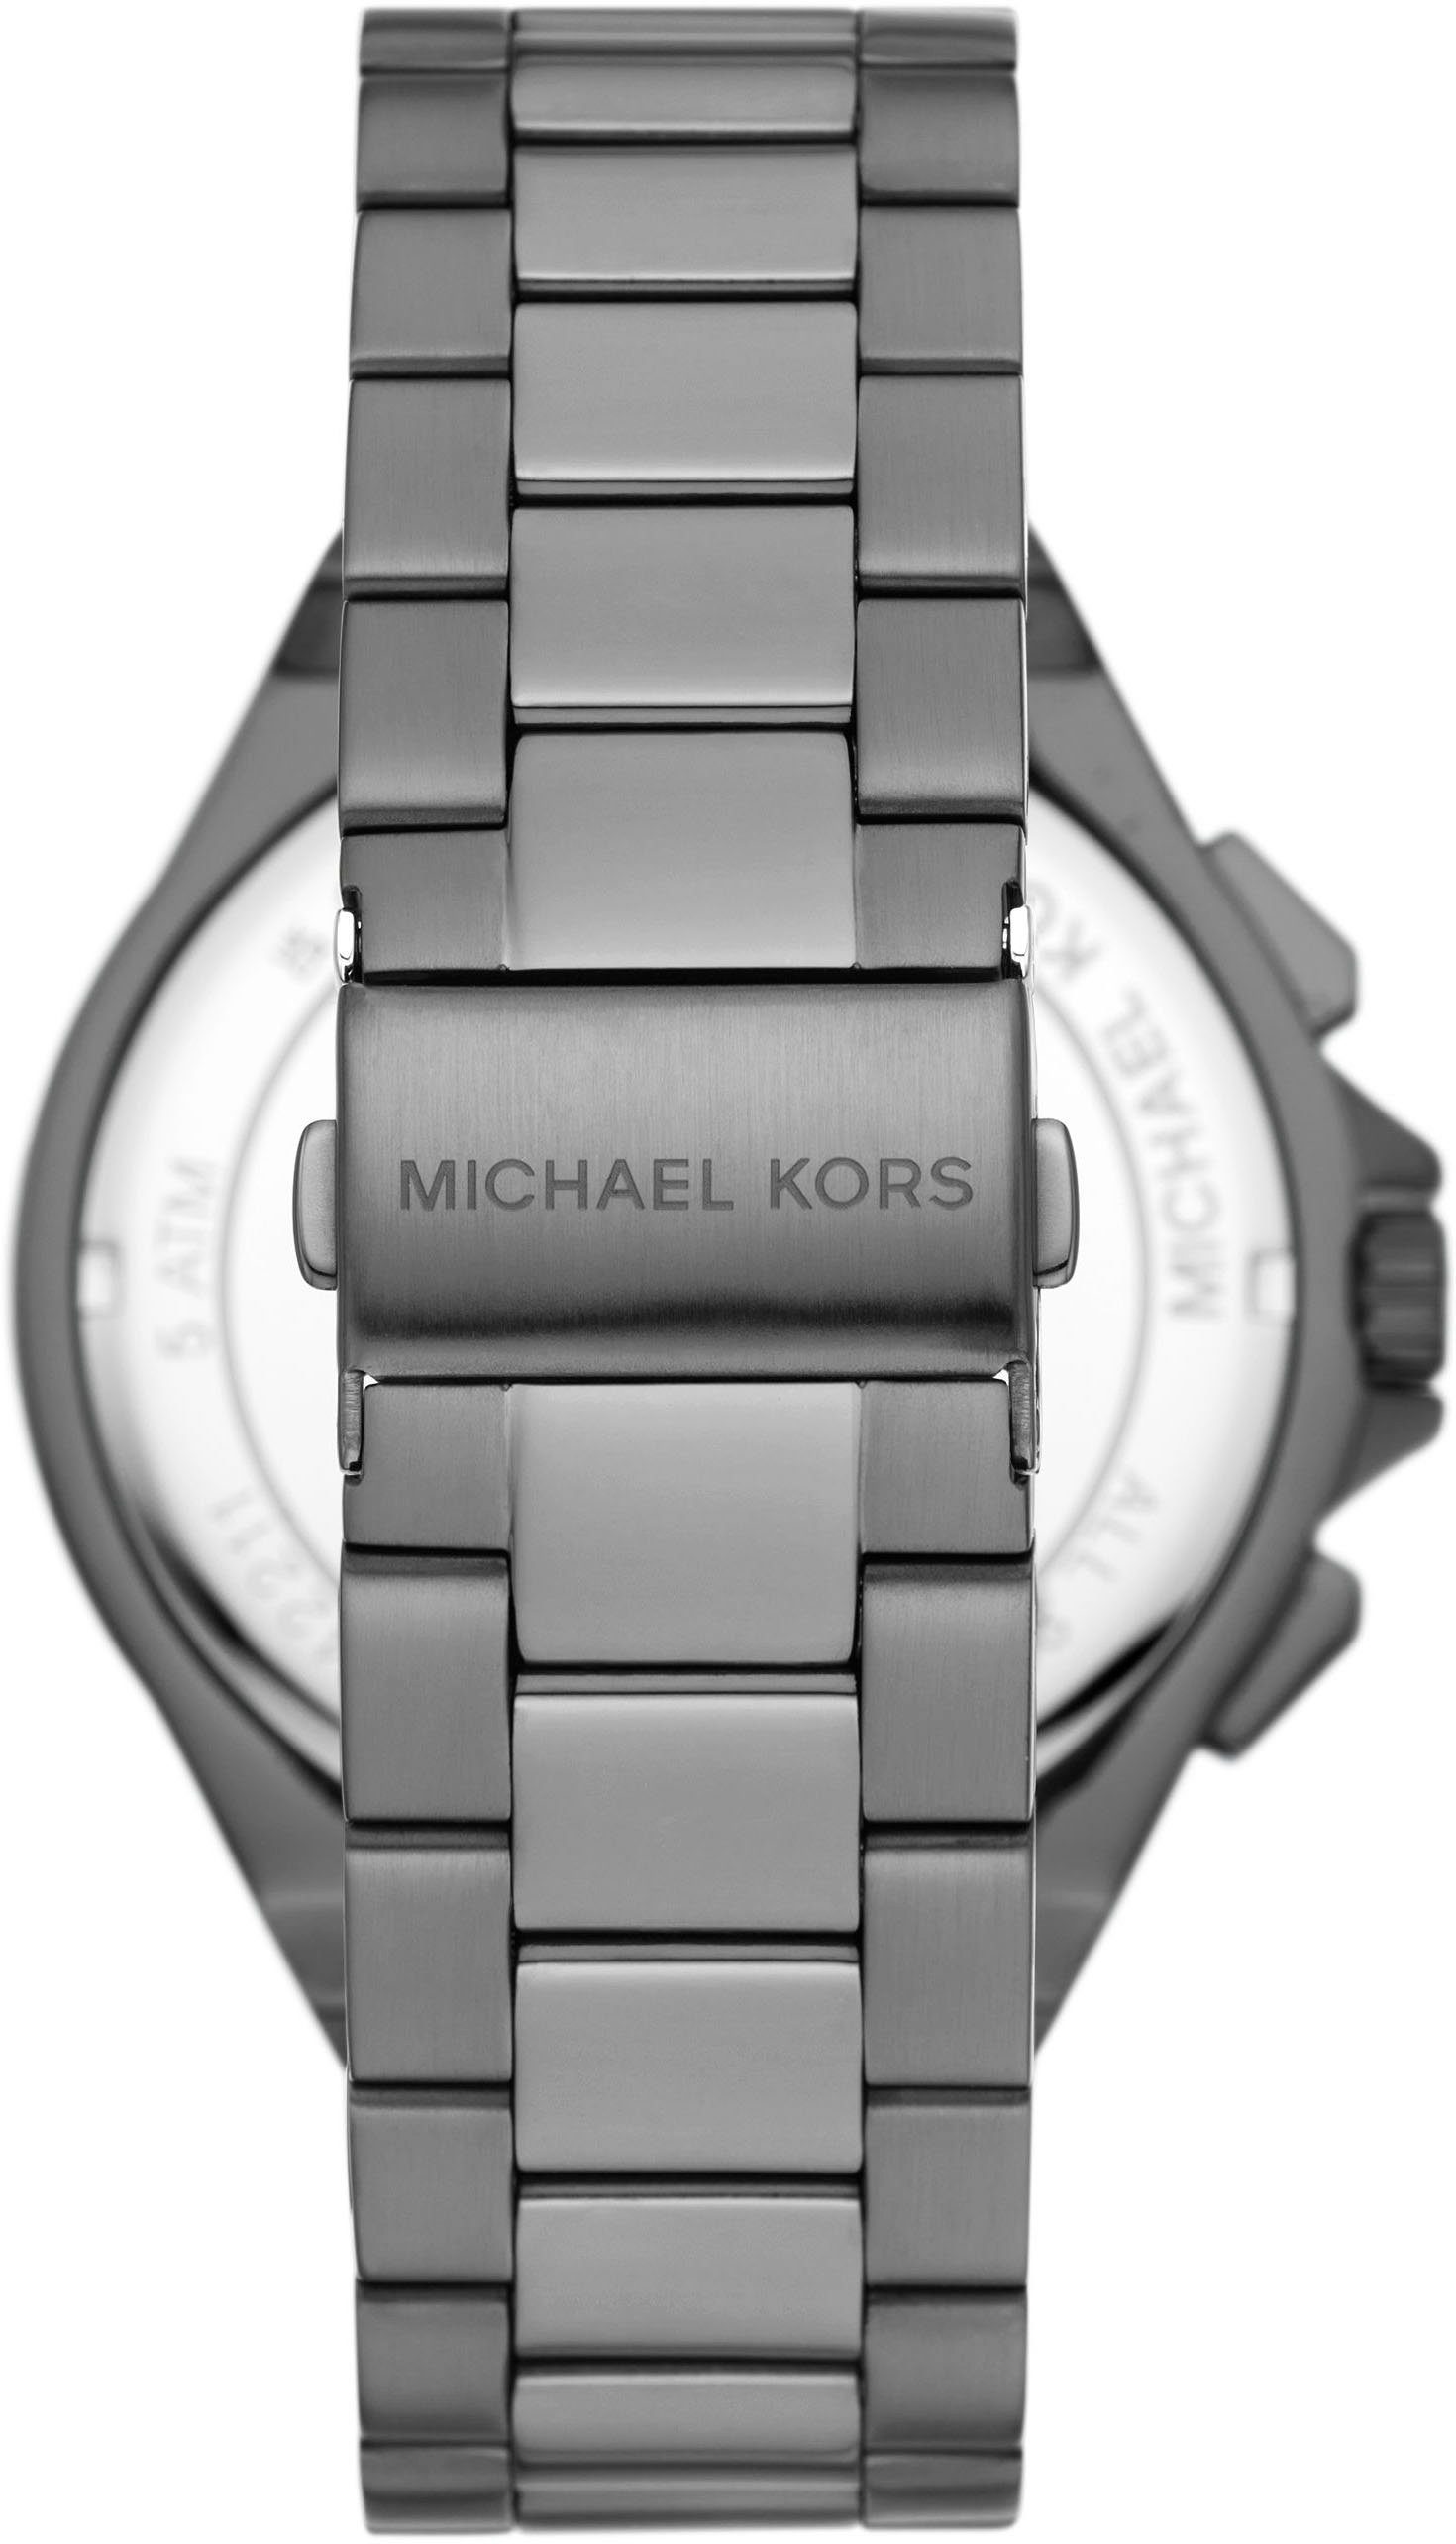 MICHAEL KORS Chronograph LENNOX, MK9102